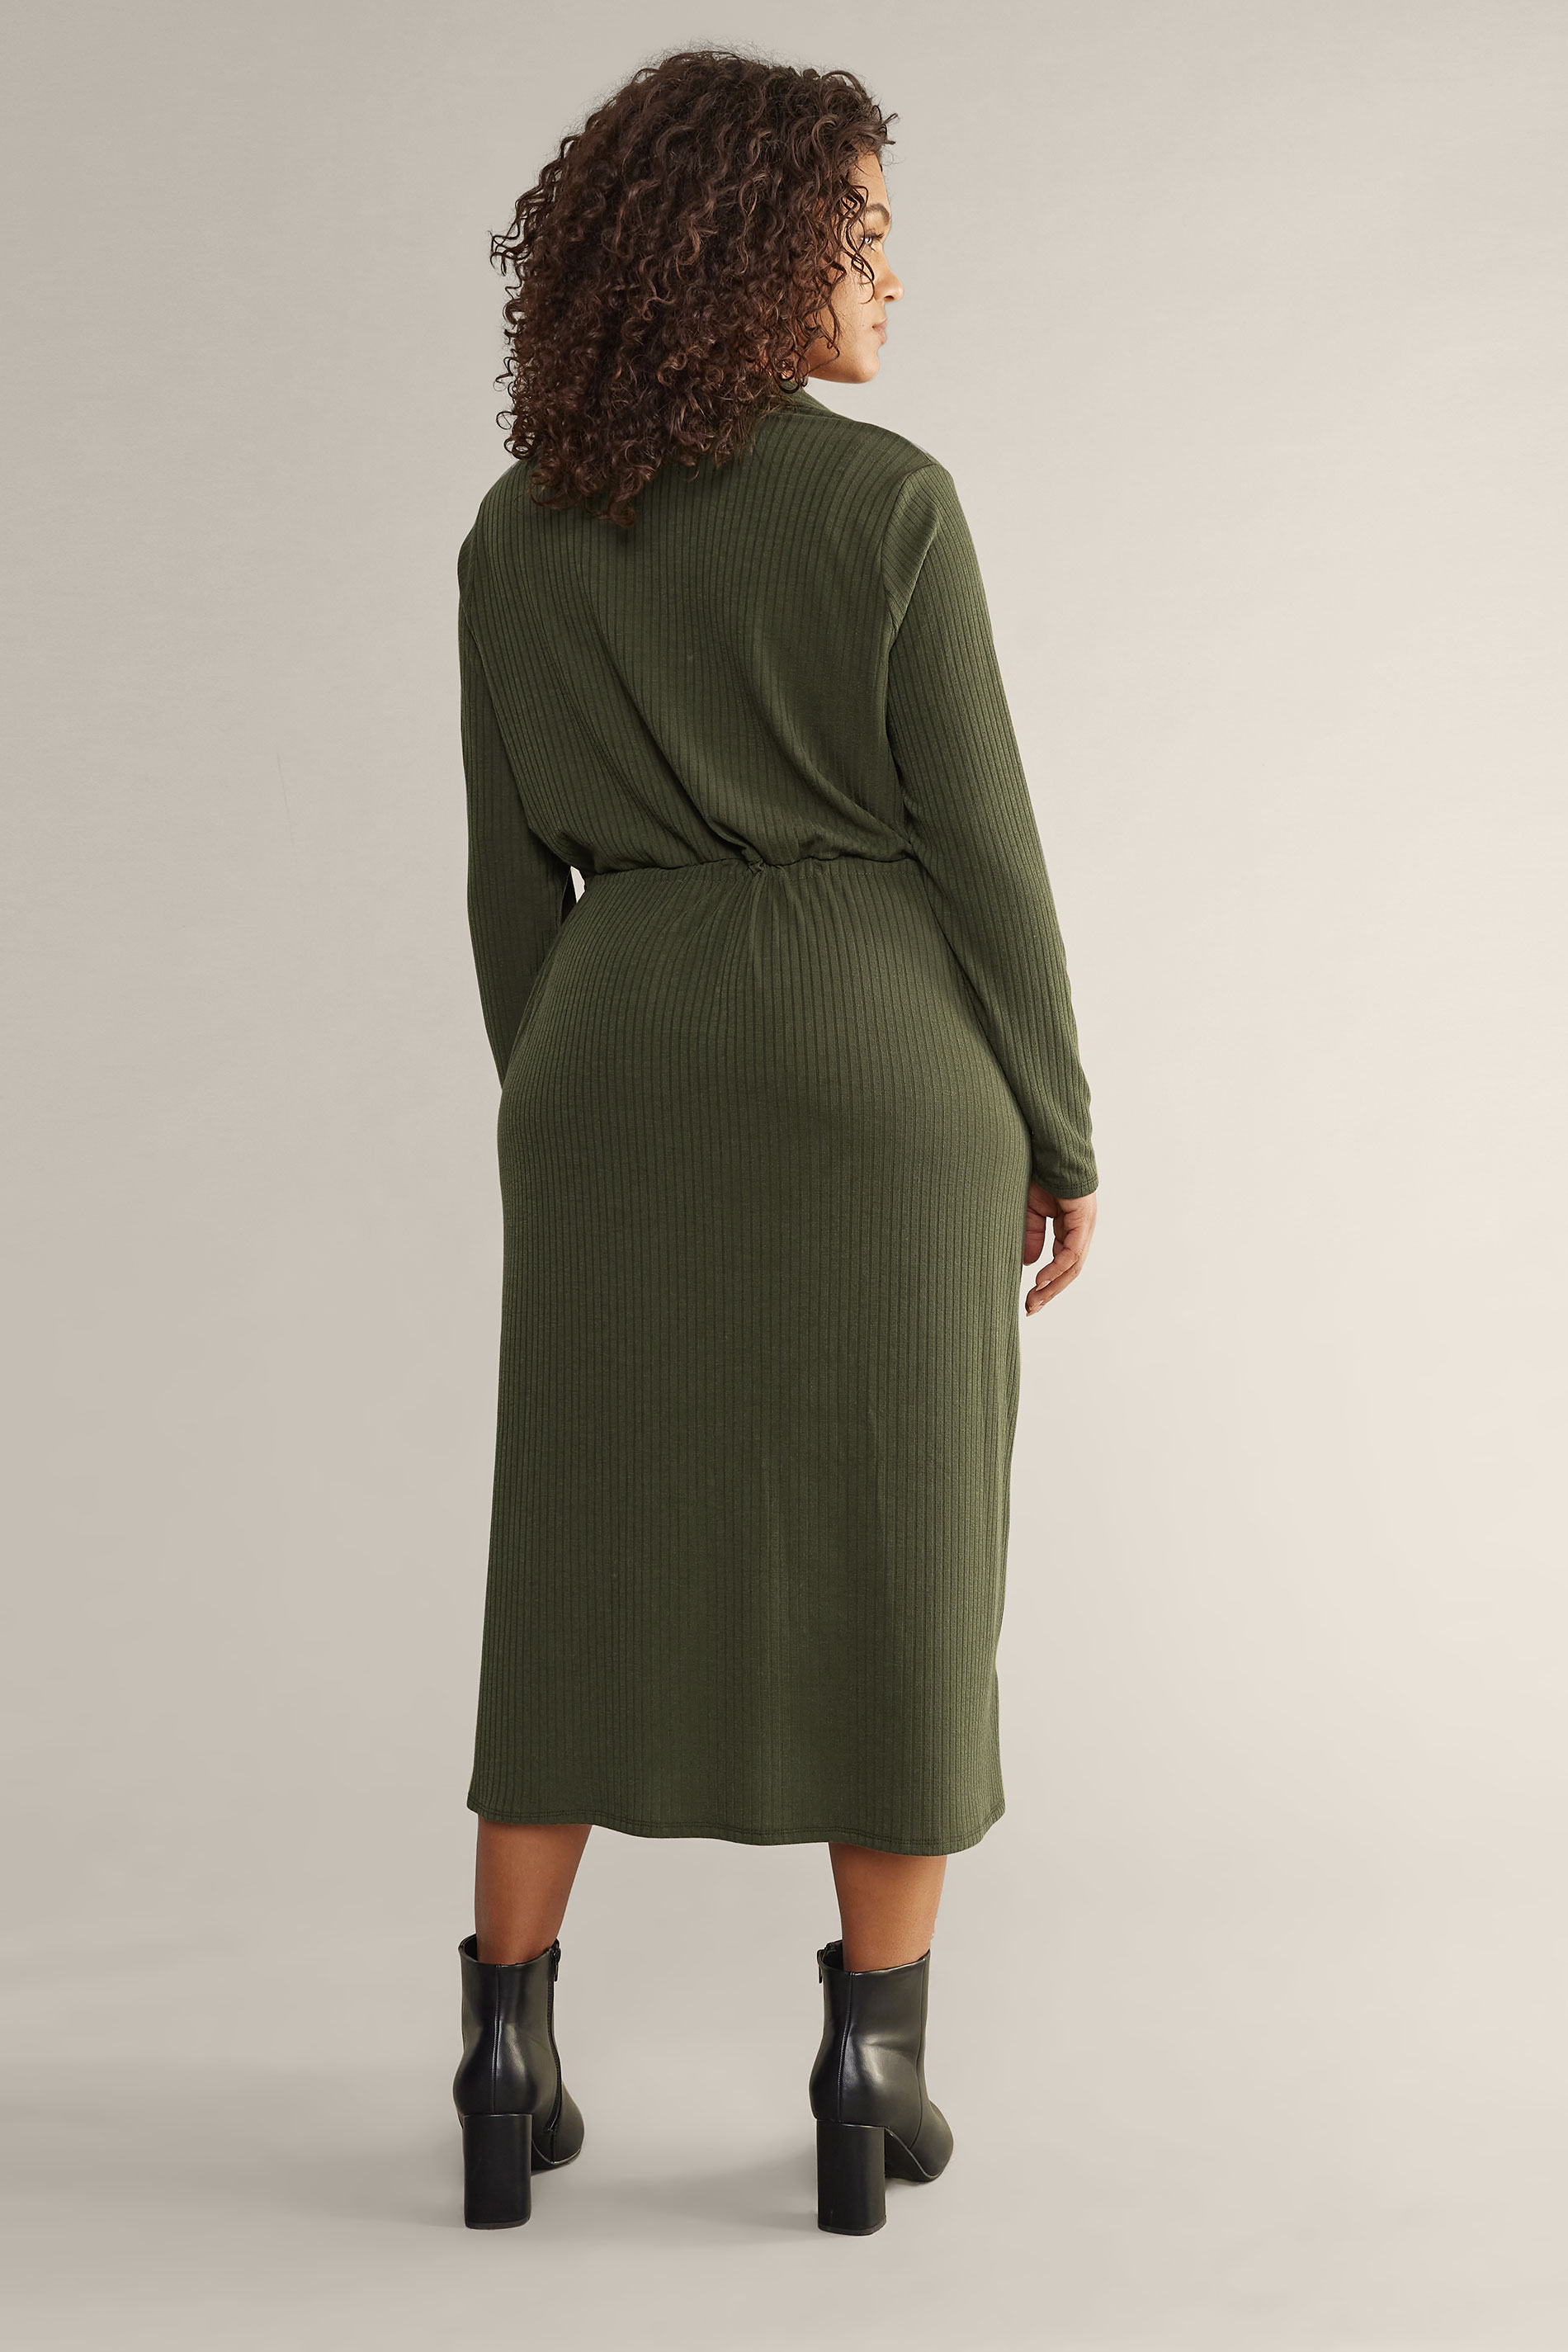 EVANS Plus Size Khaki Green Ribbed Utility Dress | Yours Clothing 3